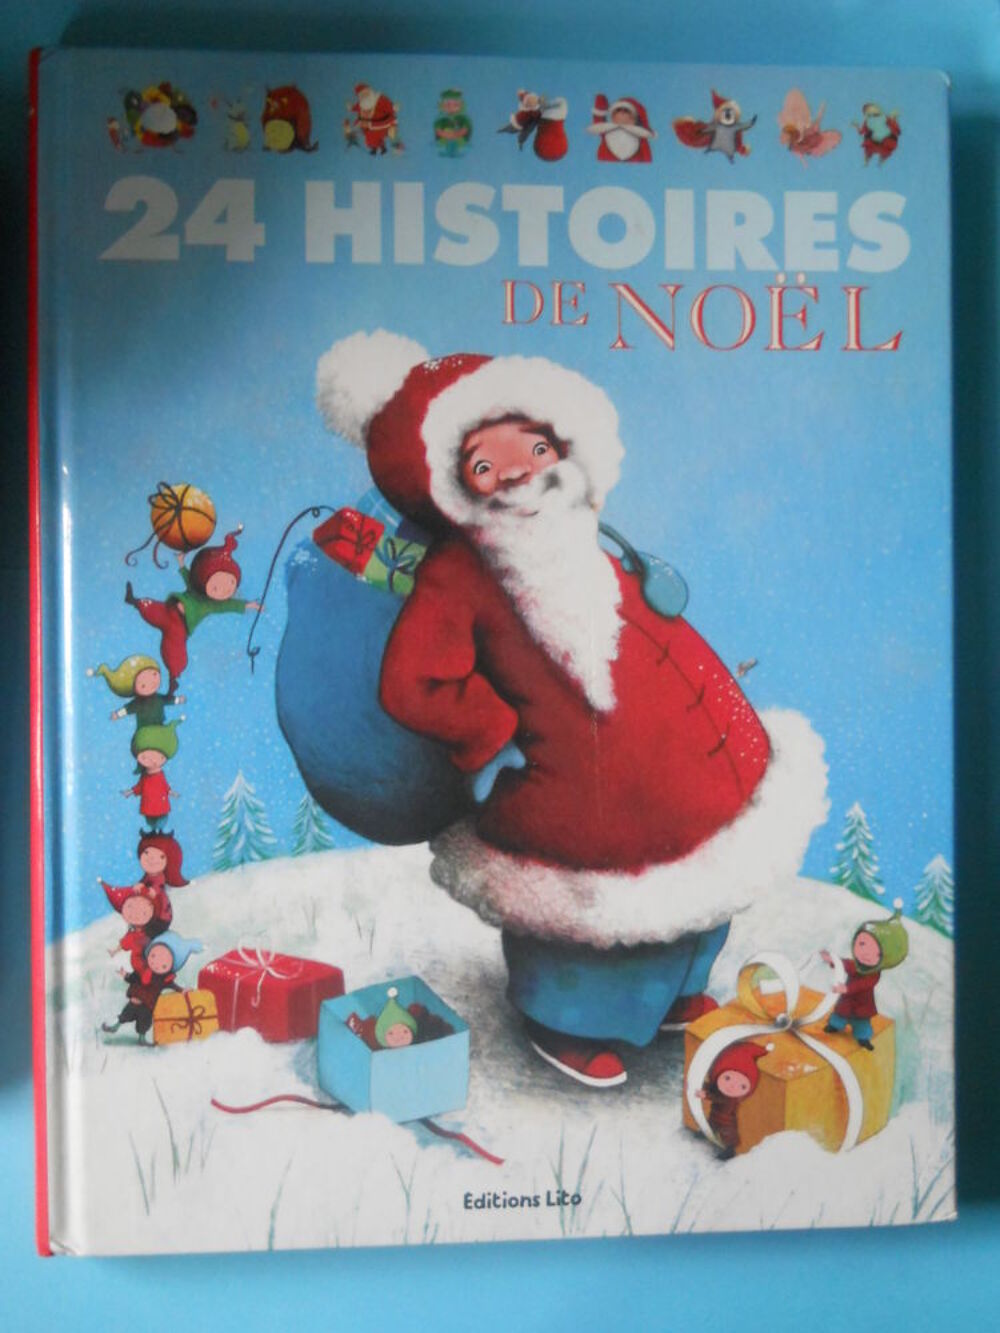 24 HISTOIRES DE NOEL - Editions LITO Livres et BD